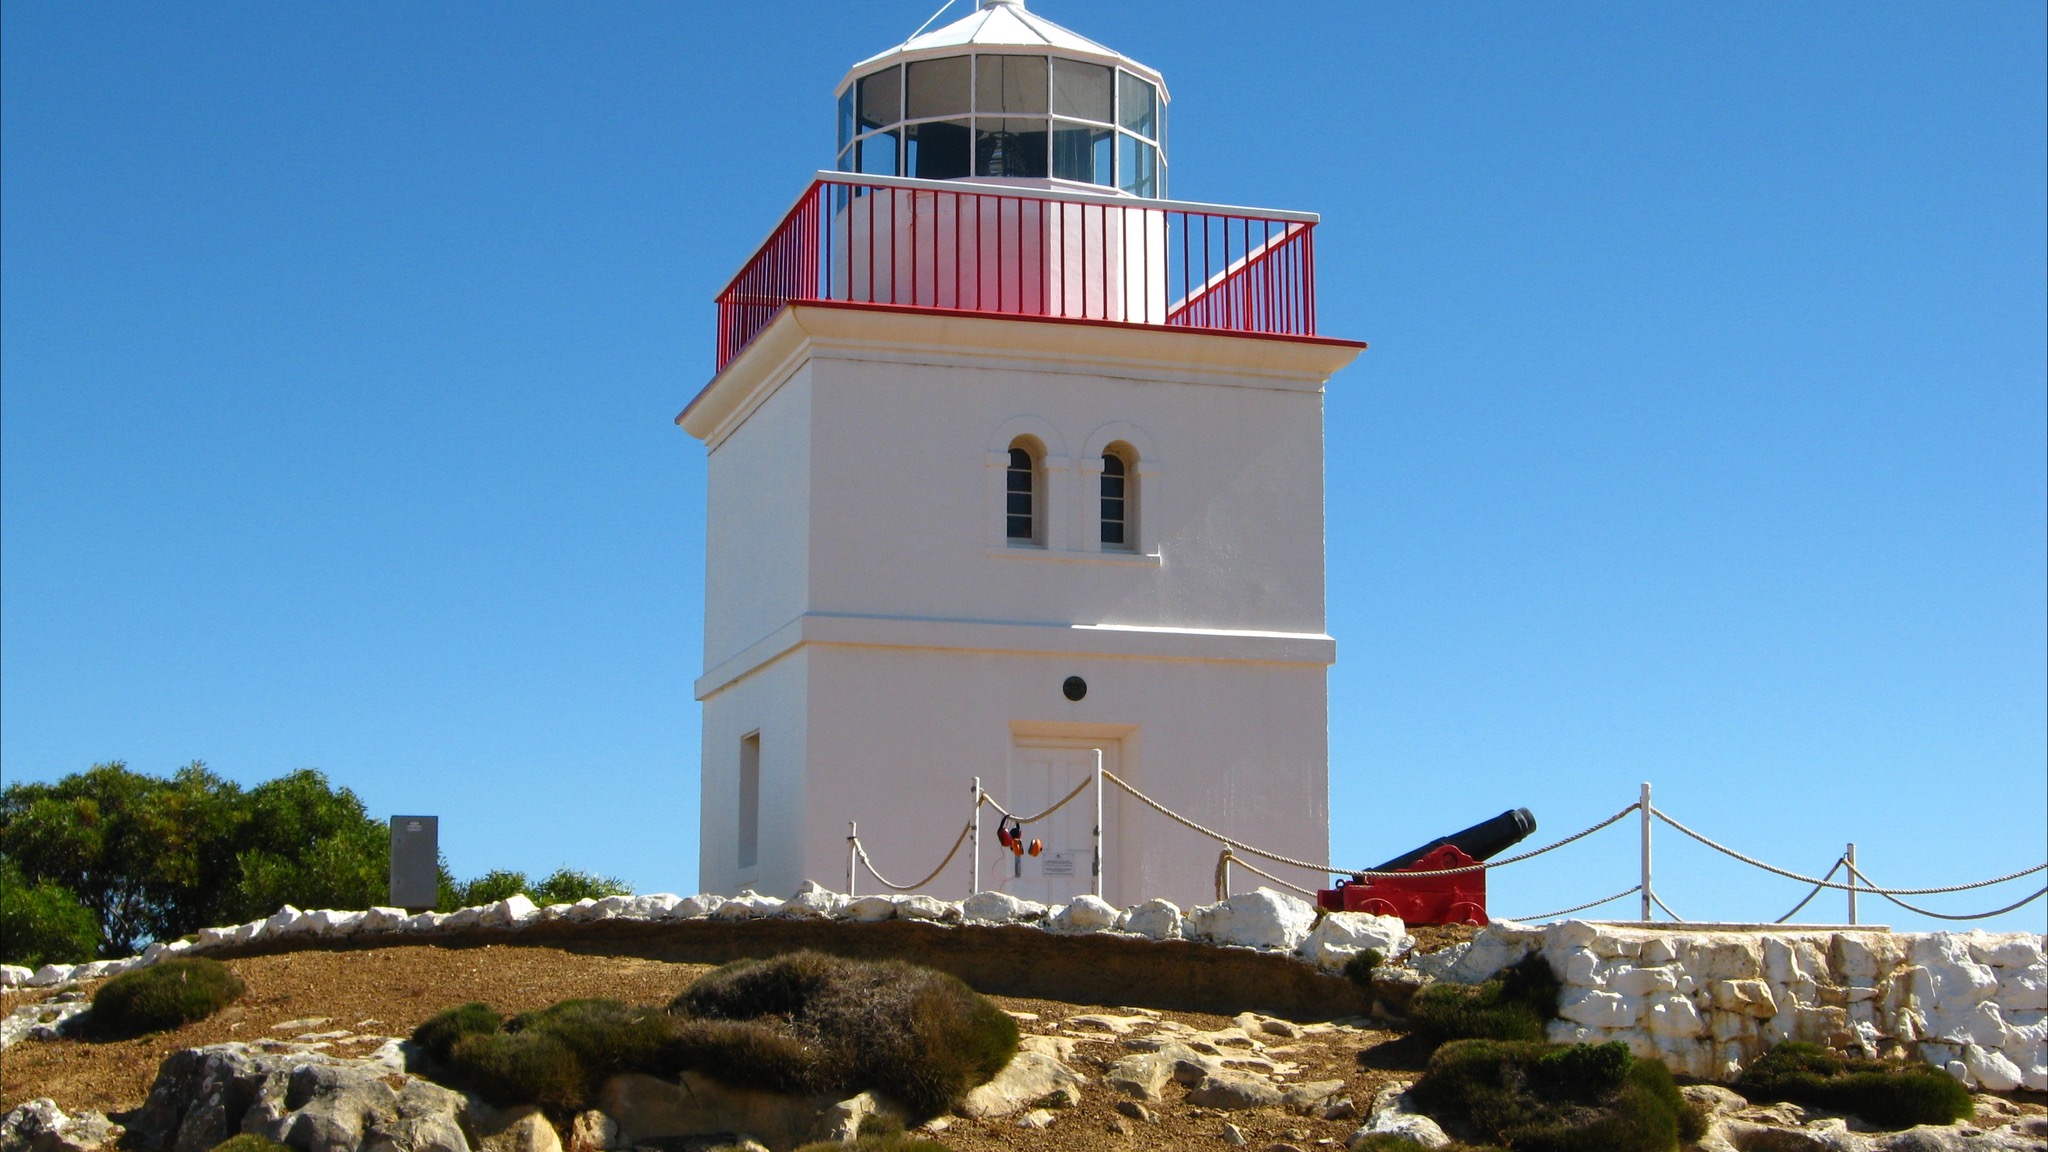 Cape Borda Lighthouse Keepers Heritage Accommodation - Melbourne Tourism